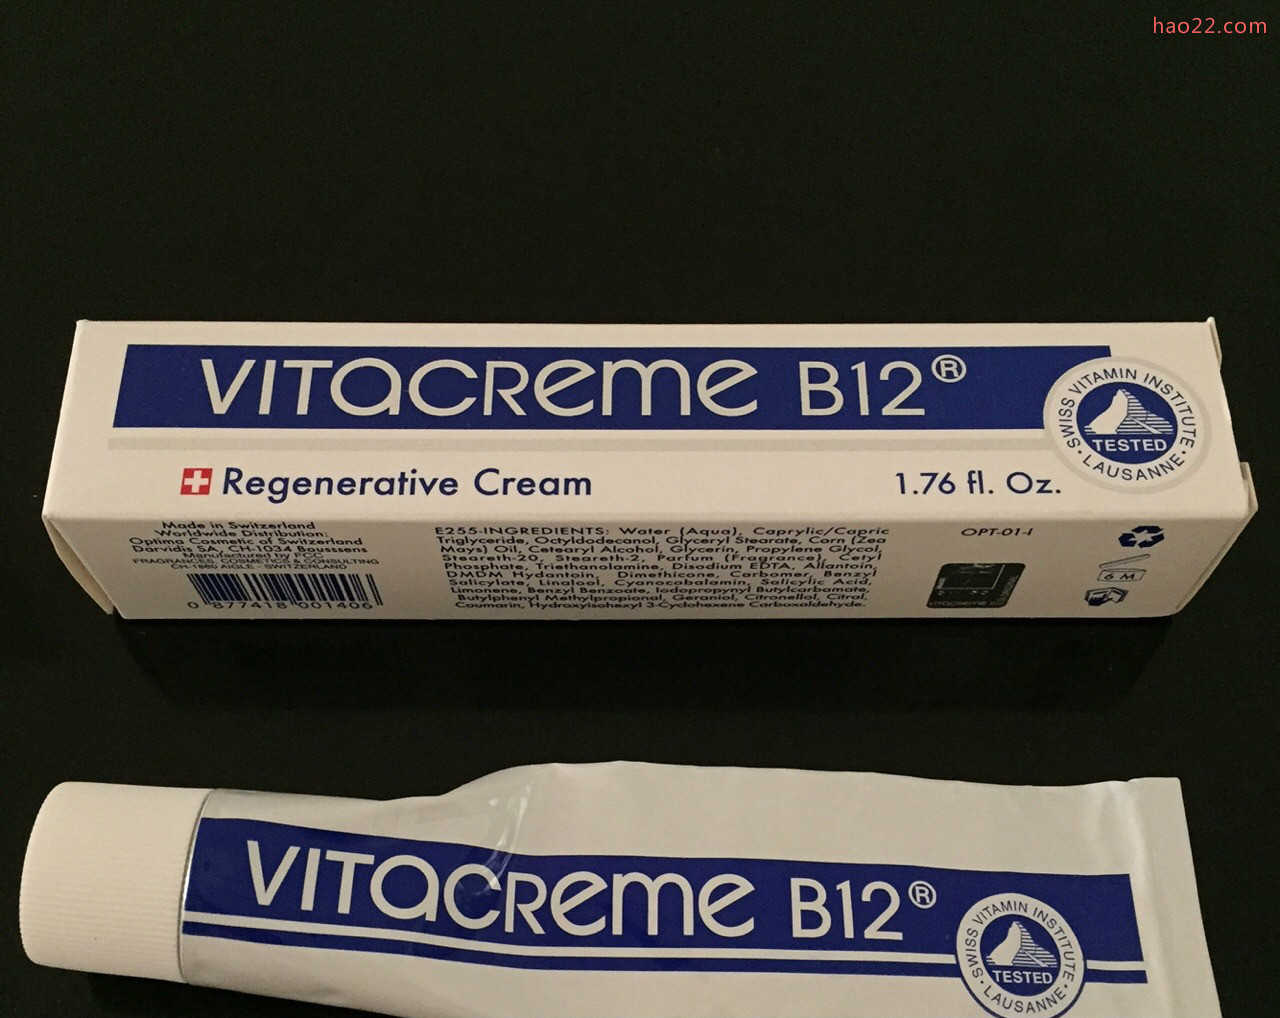 VITACREME-B12 欧蒂玛魅力唯她焕肤修护霜来自瑞士的肌肤拯救大使来自瑞士FCC药厂制造 